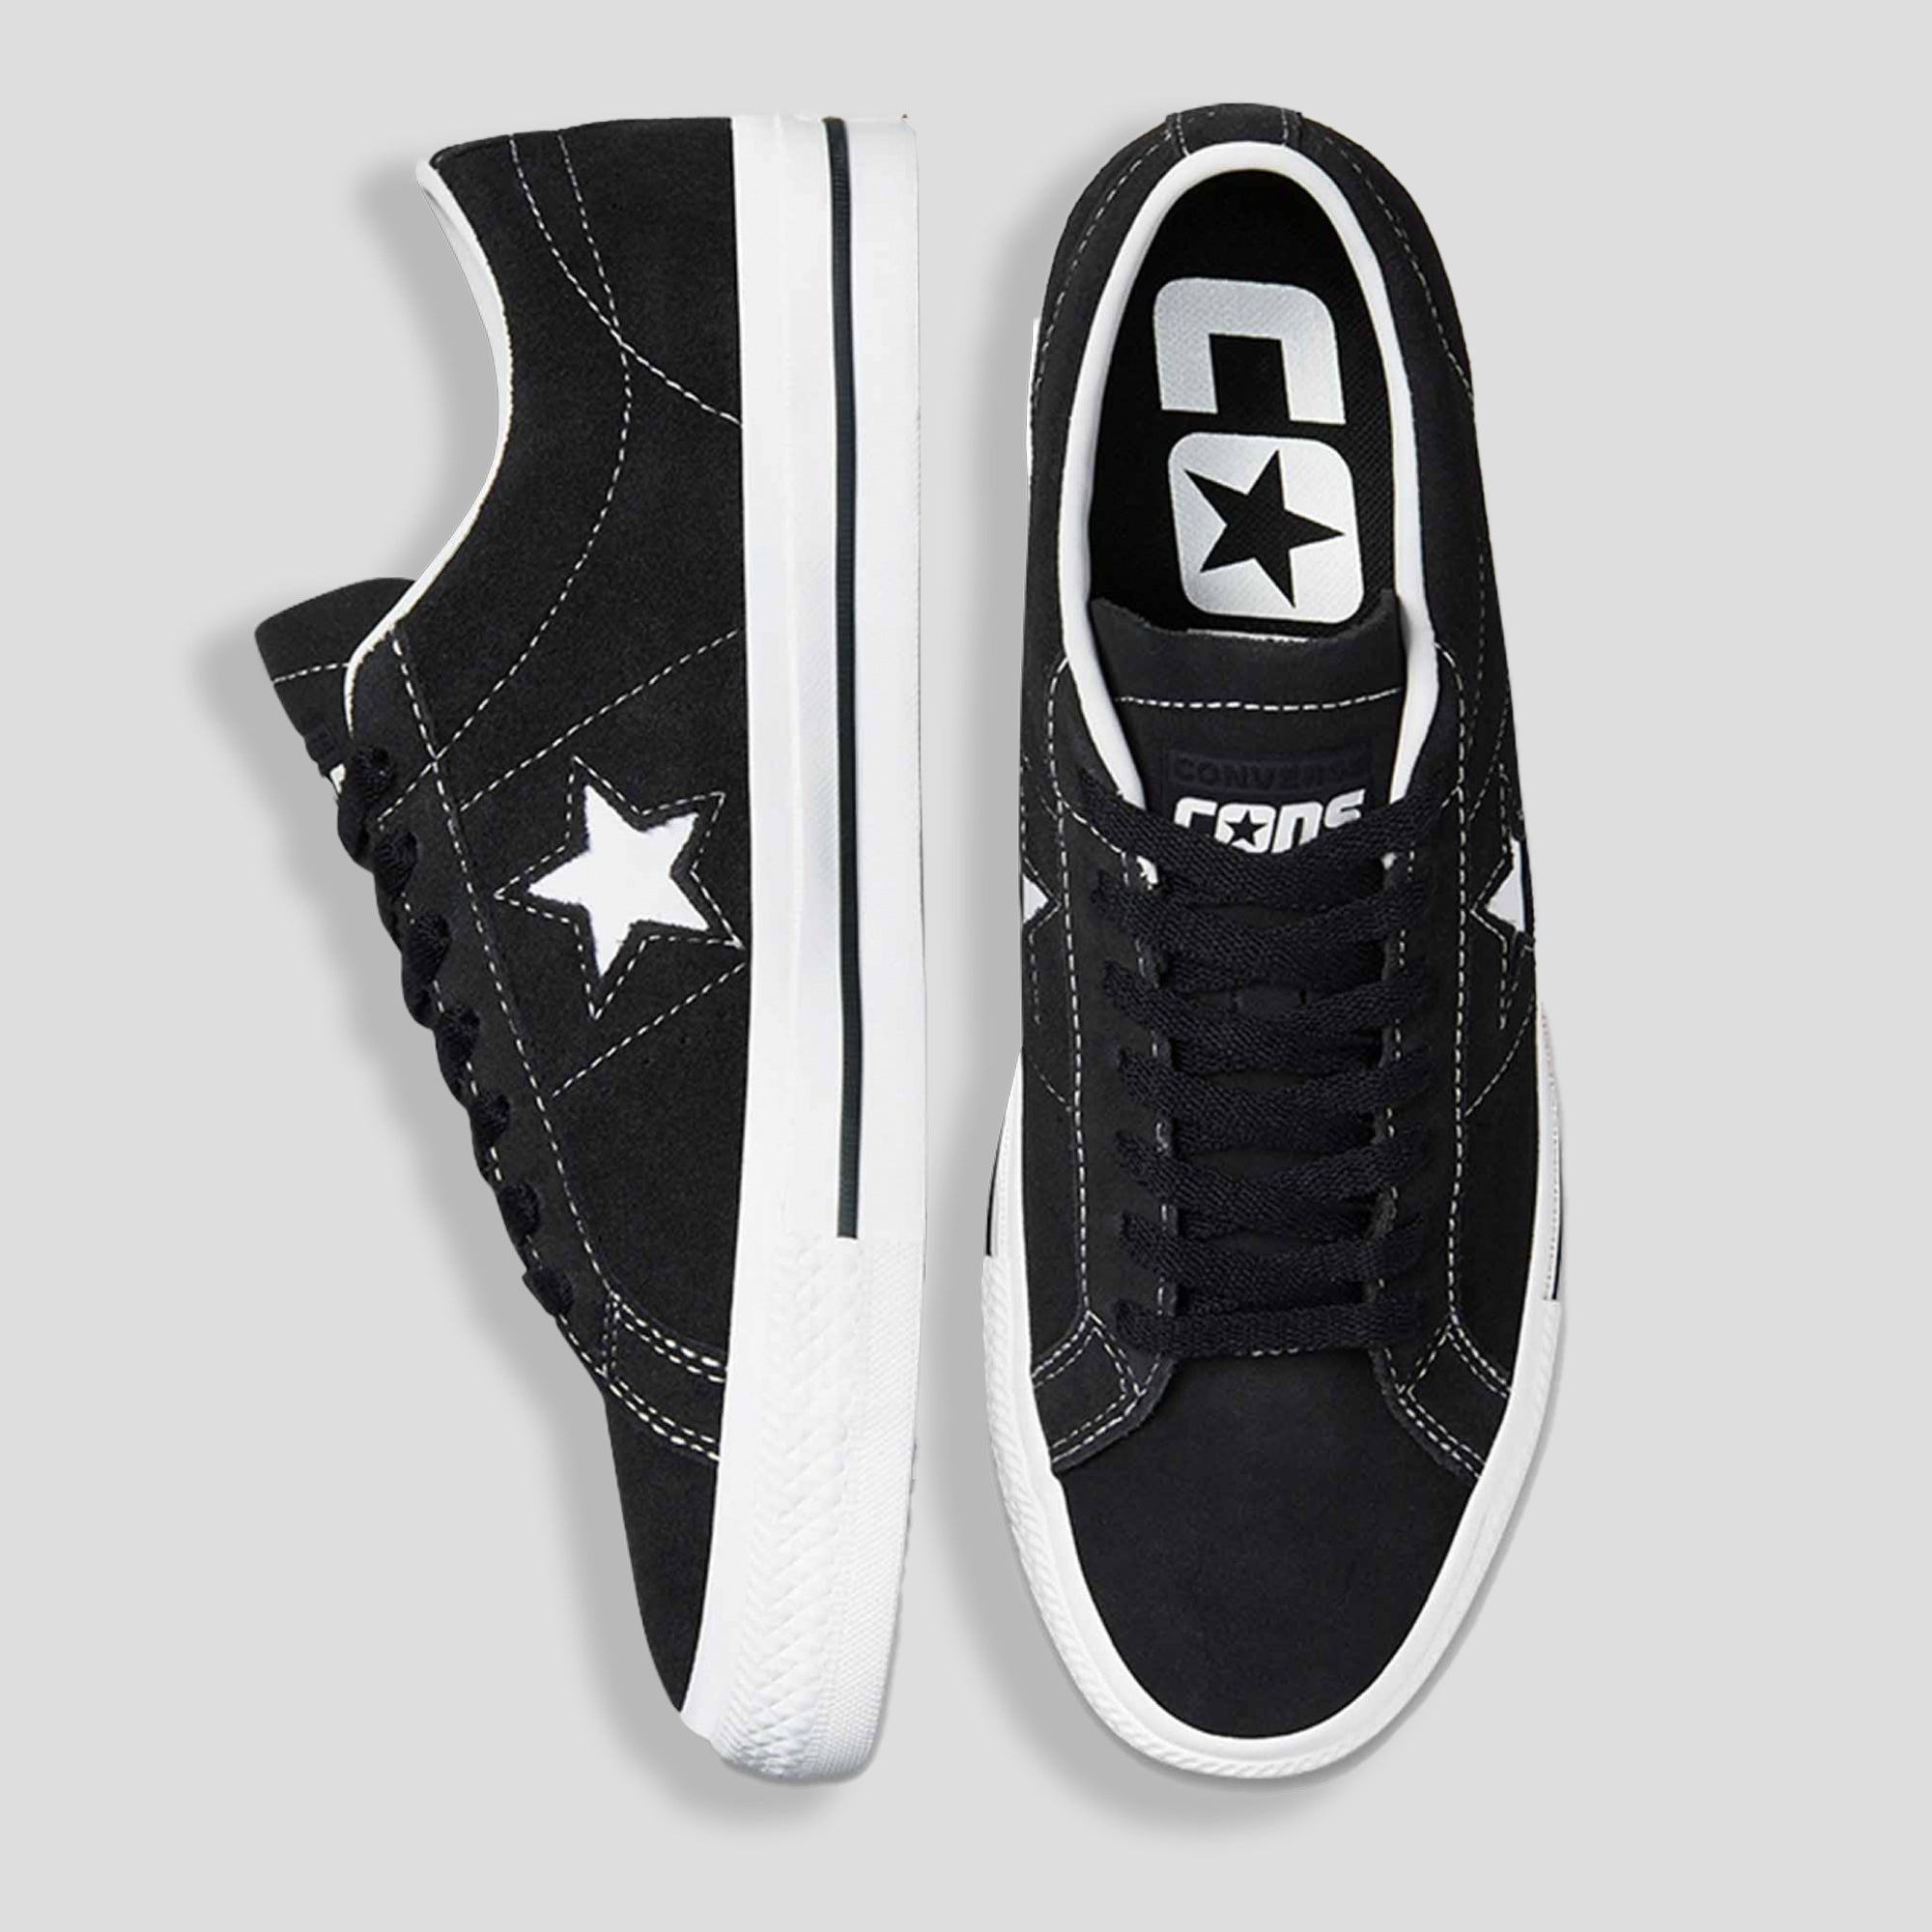 Converse Cons One Star Pro Classic - Black / White